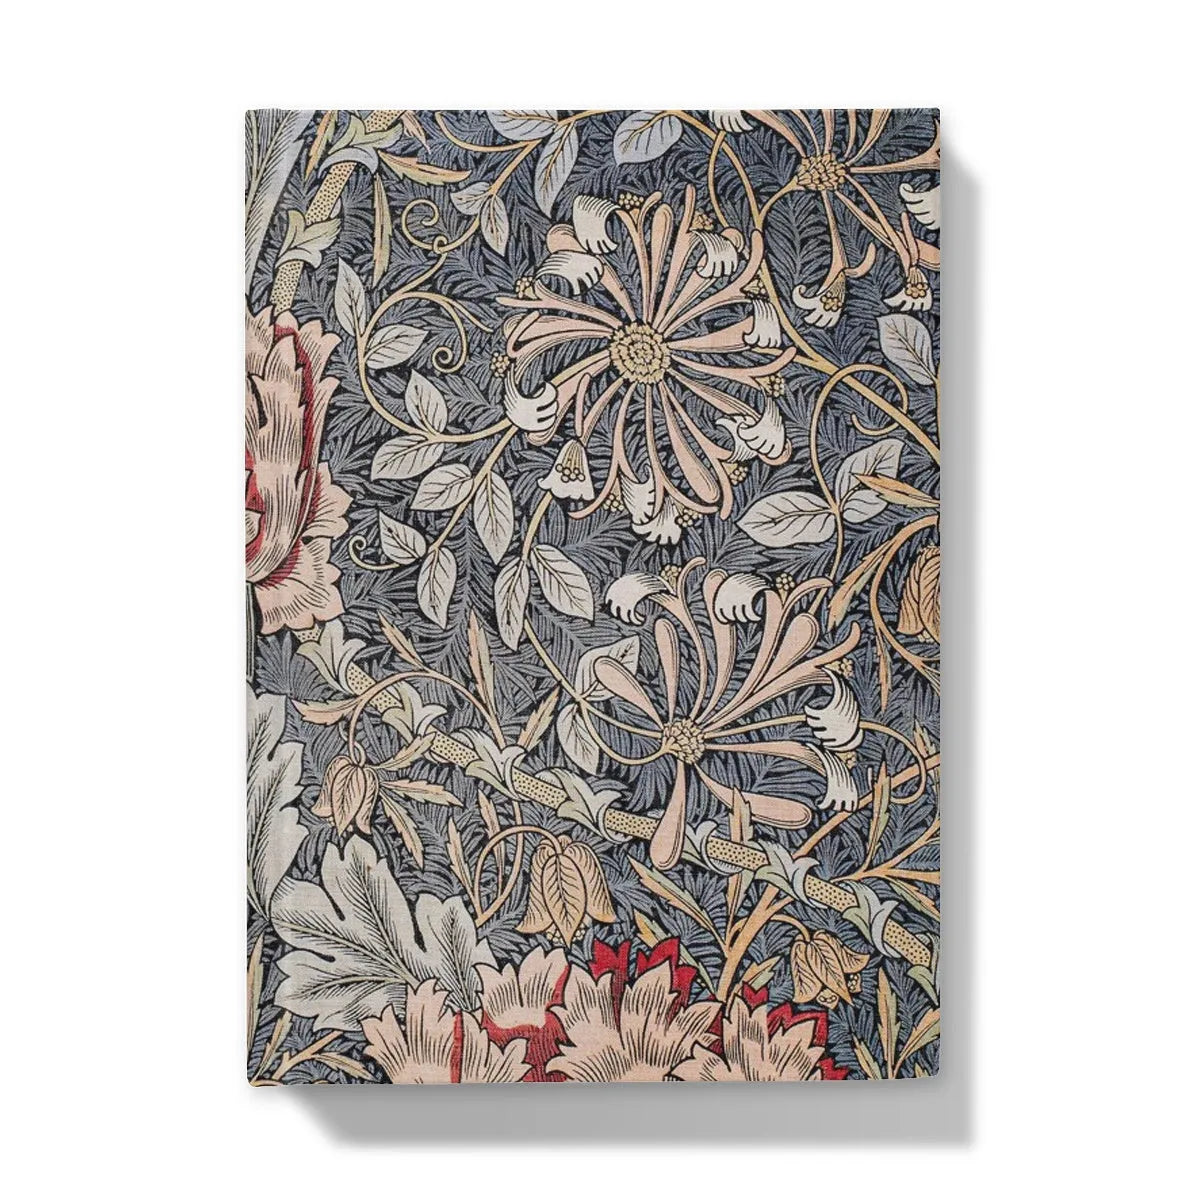 Honeysuckle - William Morris Decorative Floral Art Journal - 5’x7’ / 5’ x 7’ - Lined Paper - Notebooks &